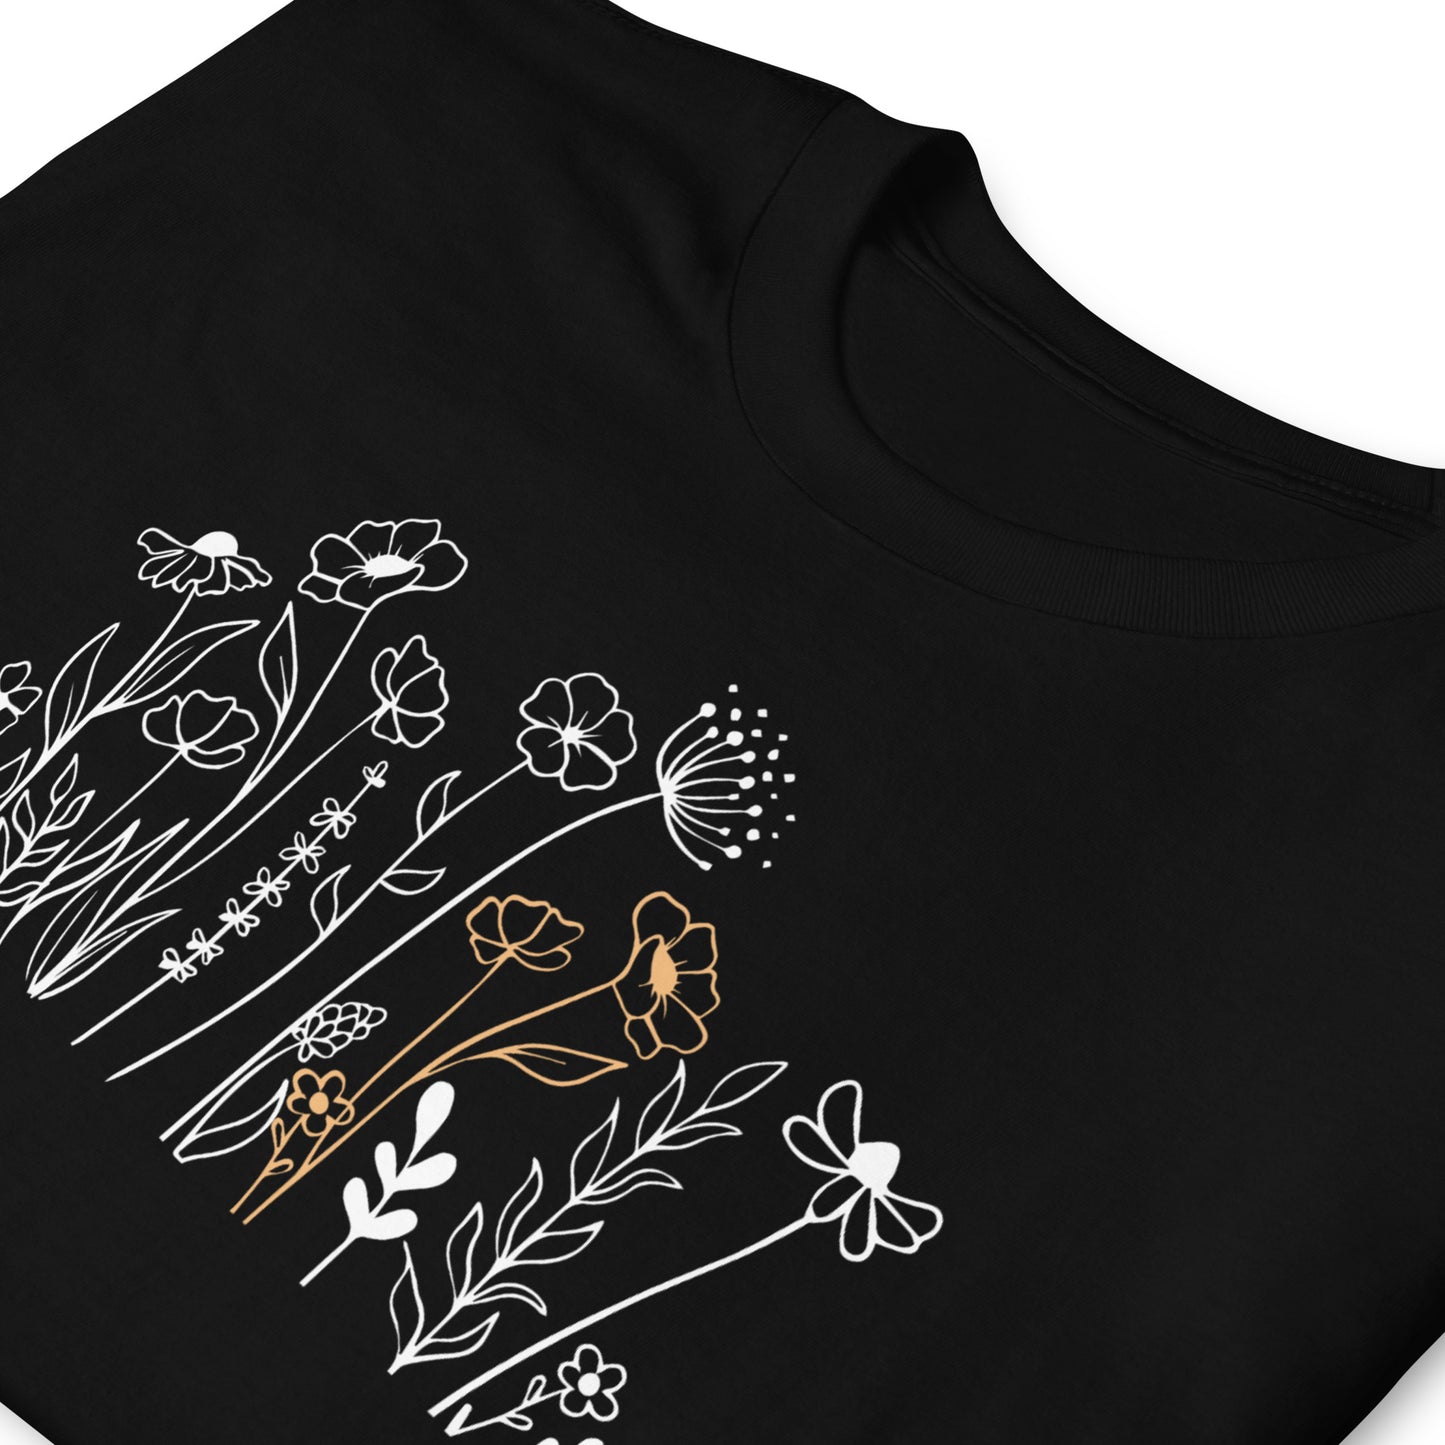 Unisex t-shirt: Wild meadow flowers